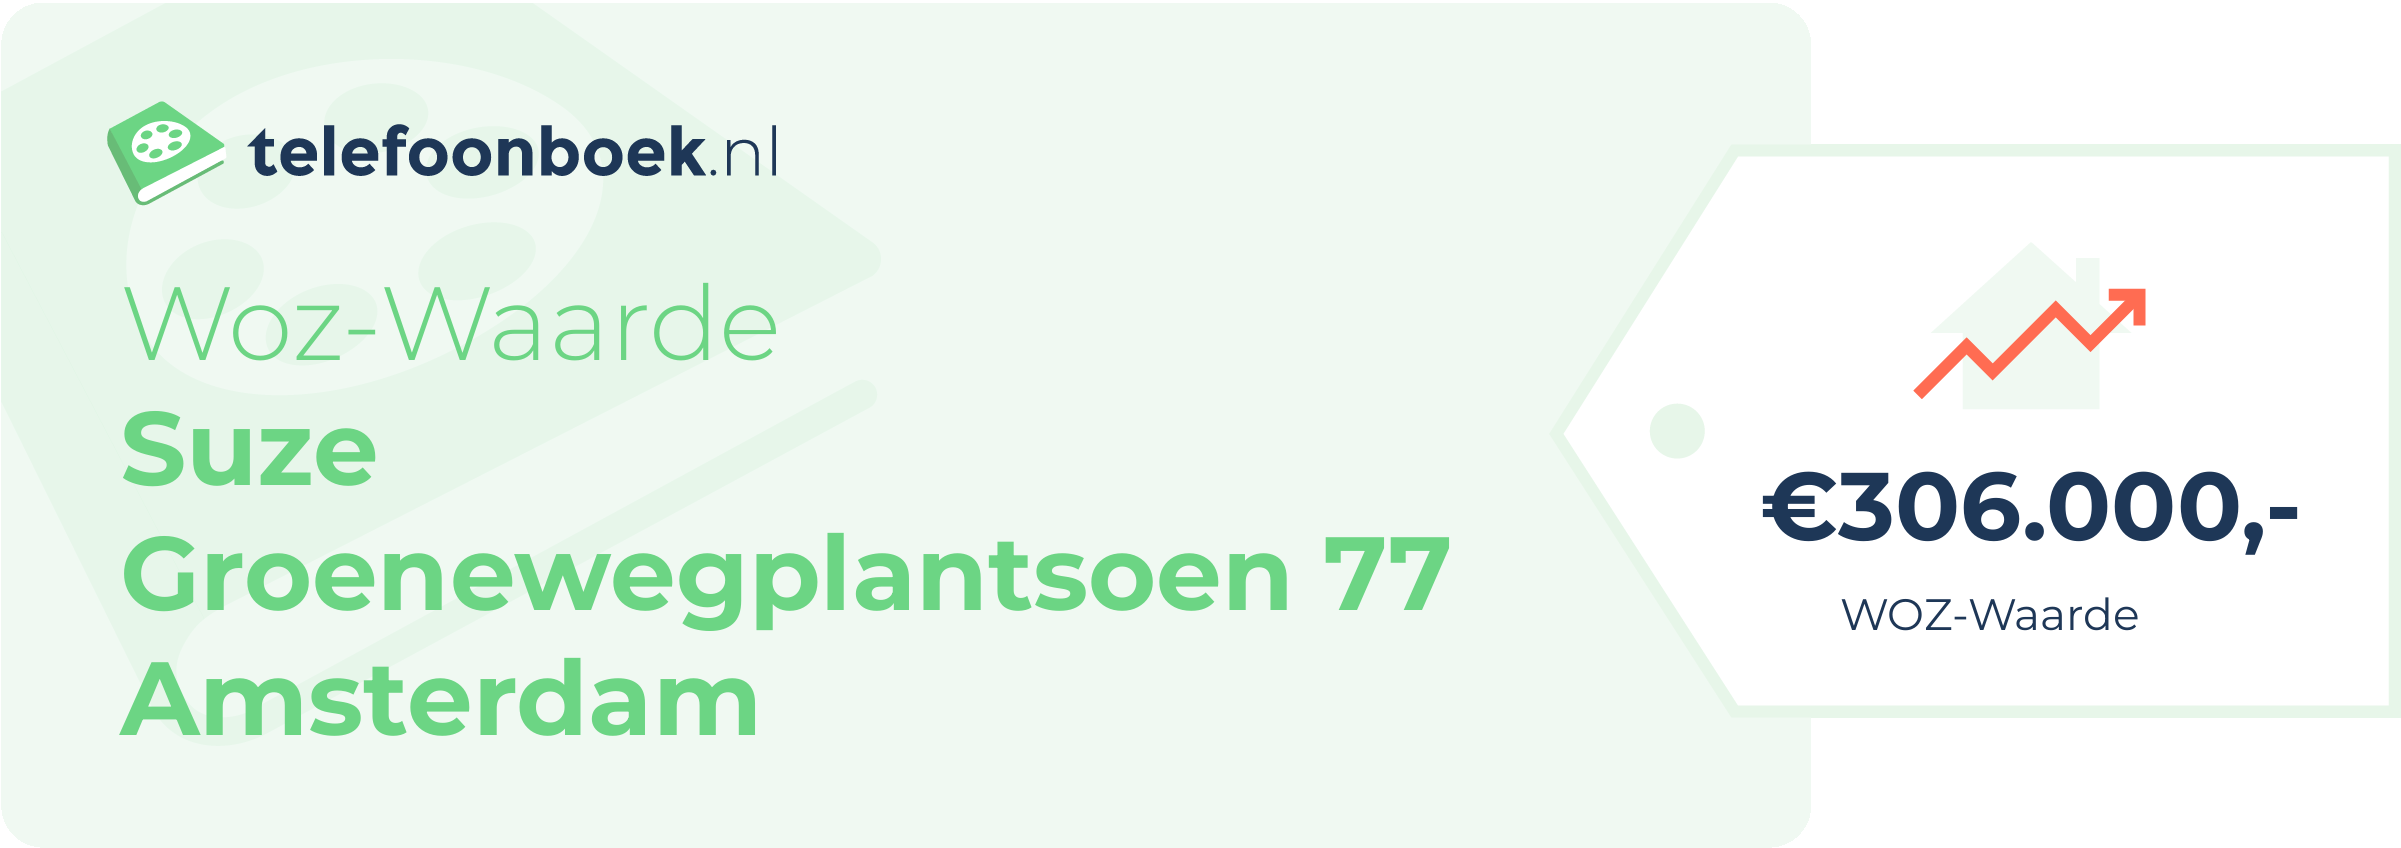 WOZ-waarde Suze Groenewegplantsoen 77 Amsterdam